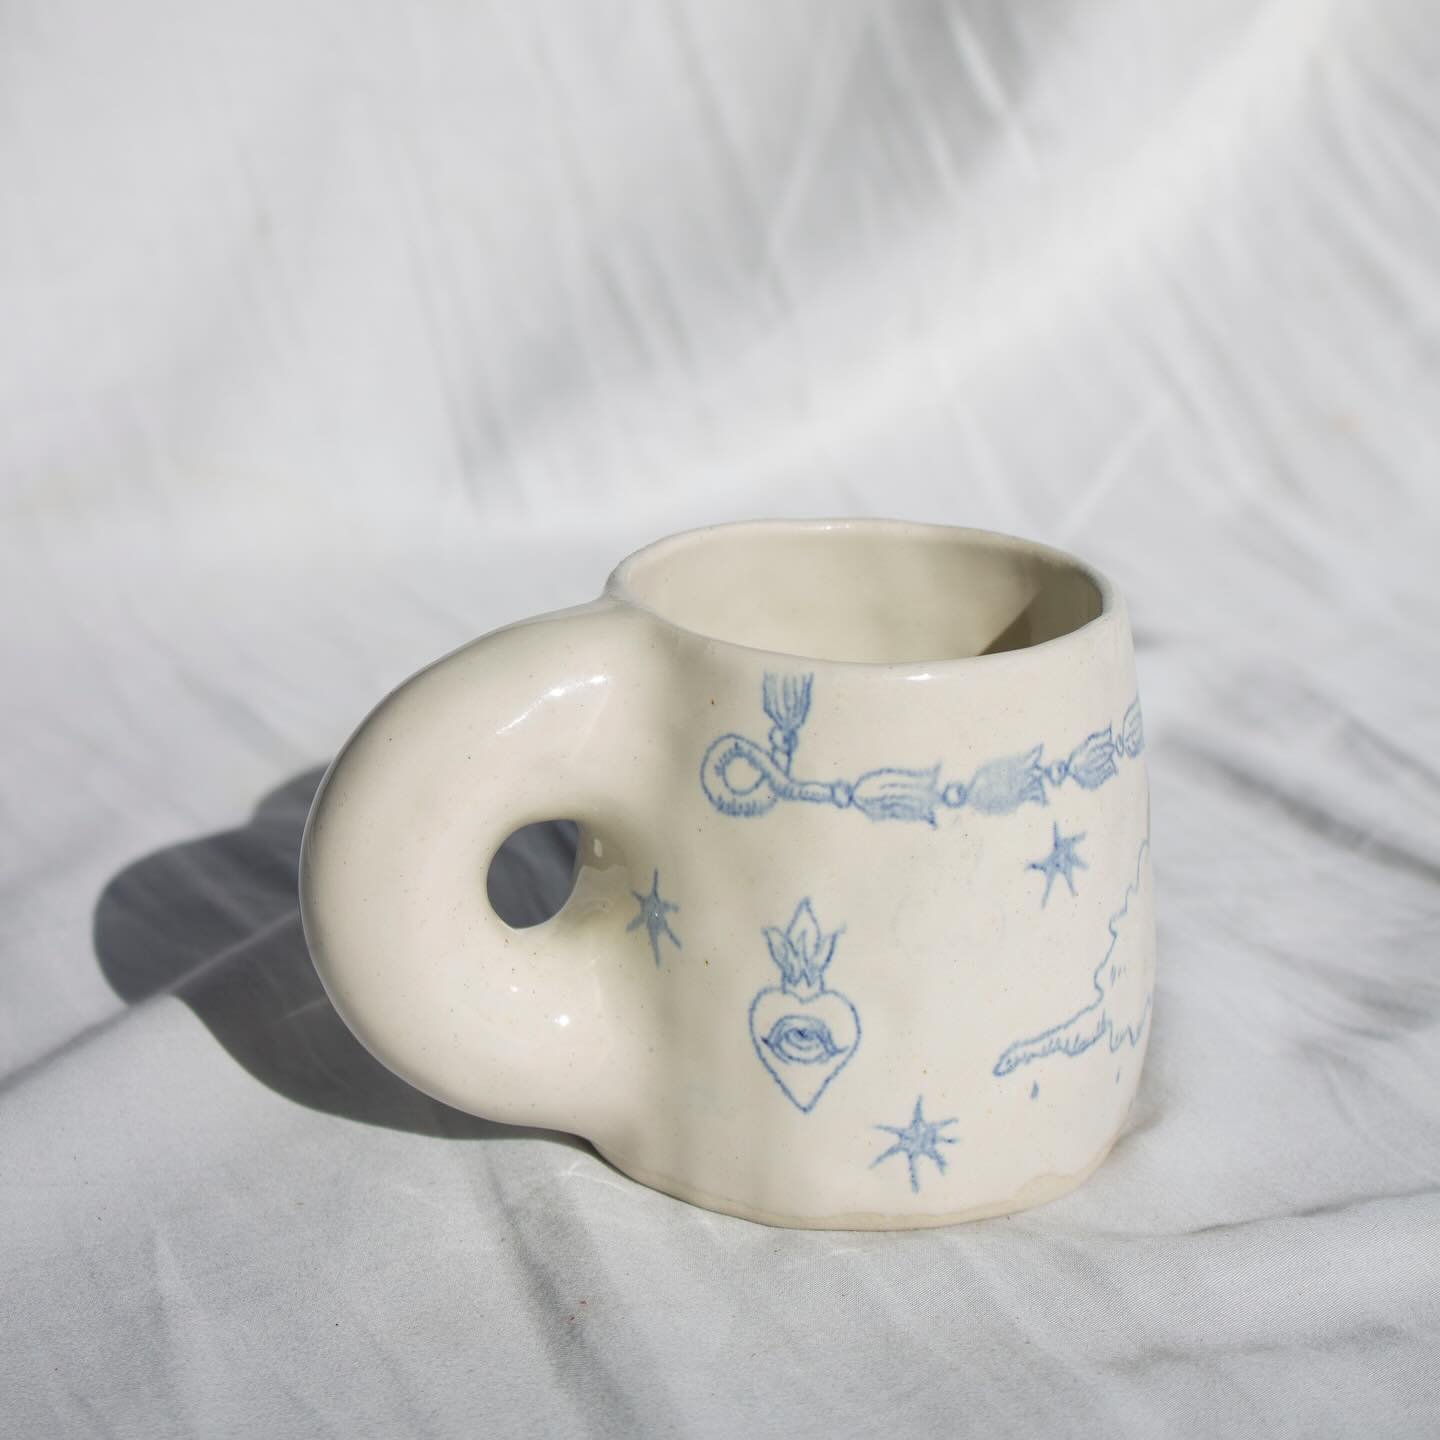 Chunky illustrated mug for @oddbirdfair 
.
.
.
#chunkymug #briscola #pottery #ceramics #handmade #porcelain #handmadepottery #modernceramics #handmadeceramics #yeg #yegmade #yegdesign #yegmaker #yegarts #visualvibes #madeincanada #madelocal #shoploca